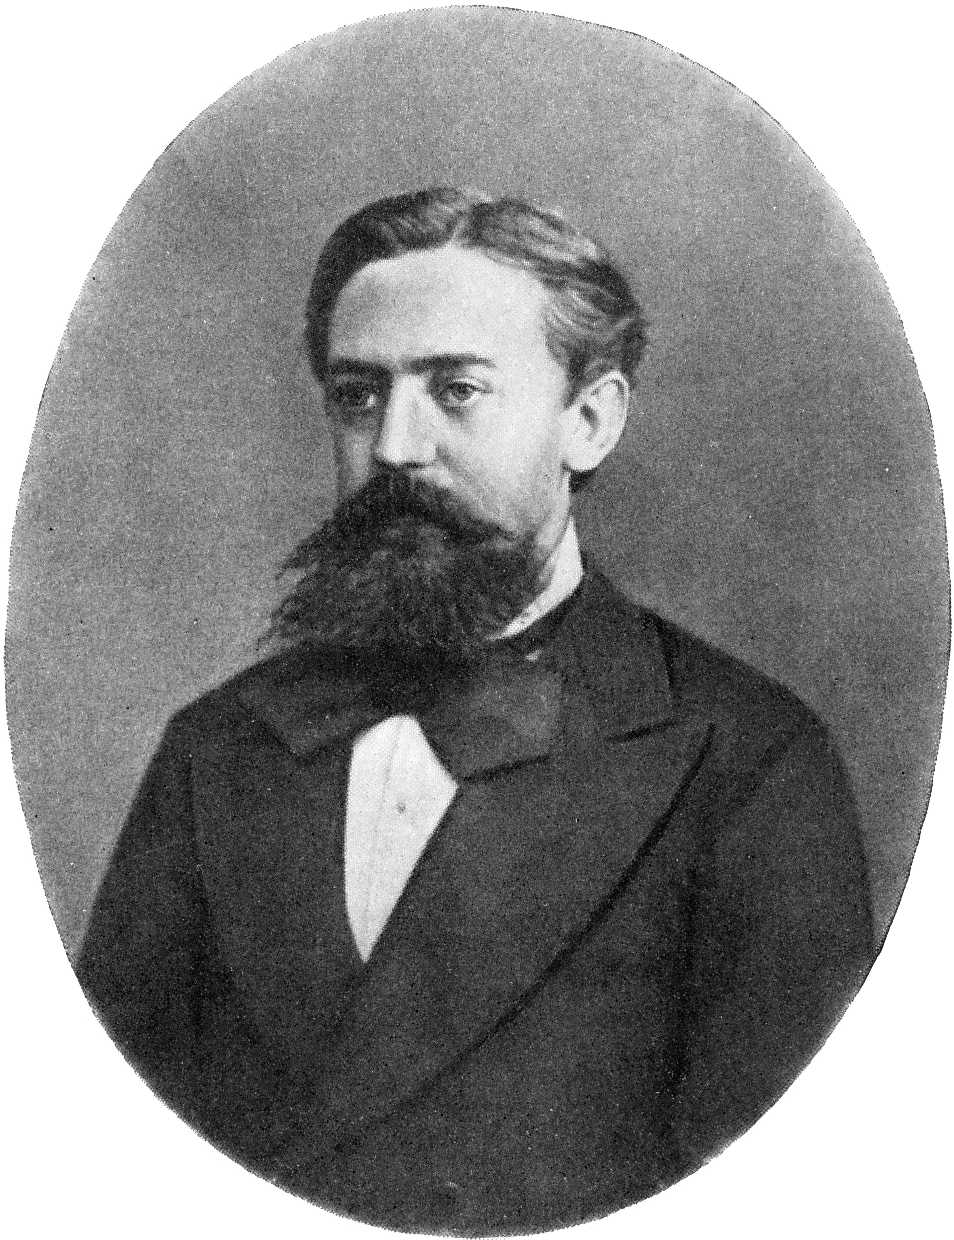 Russian mathematician Andrey Markov